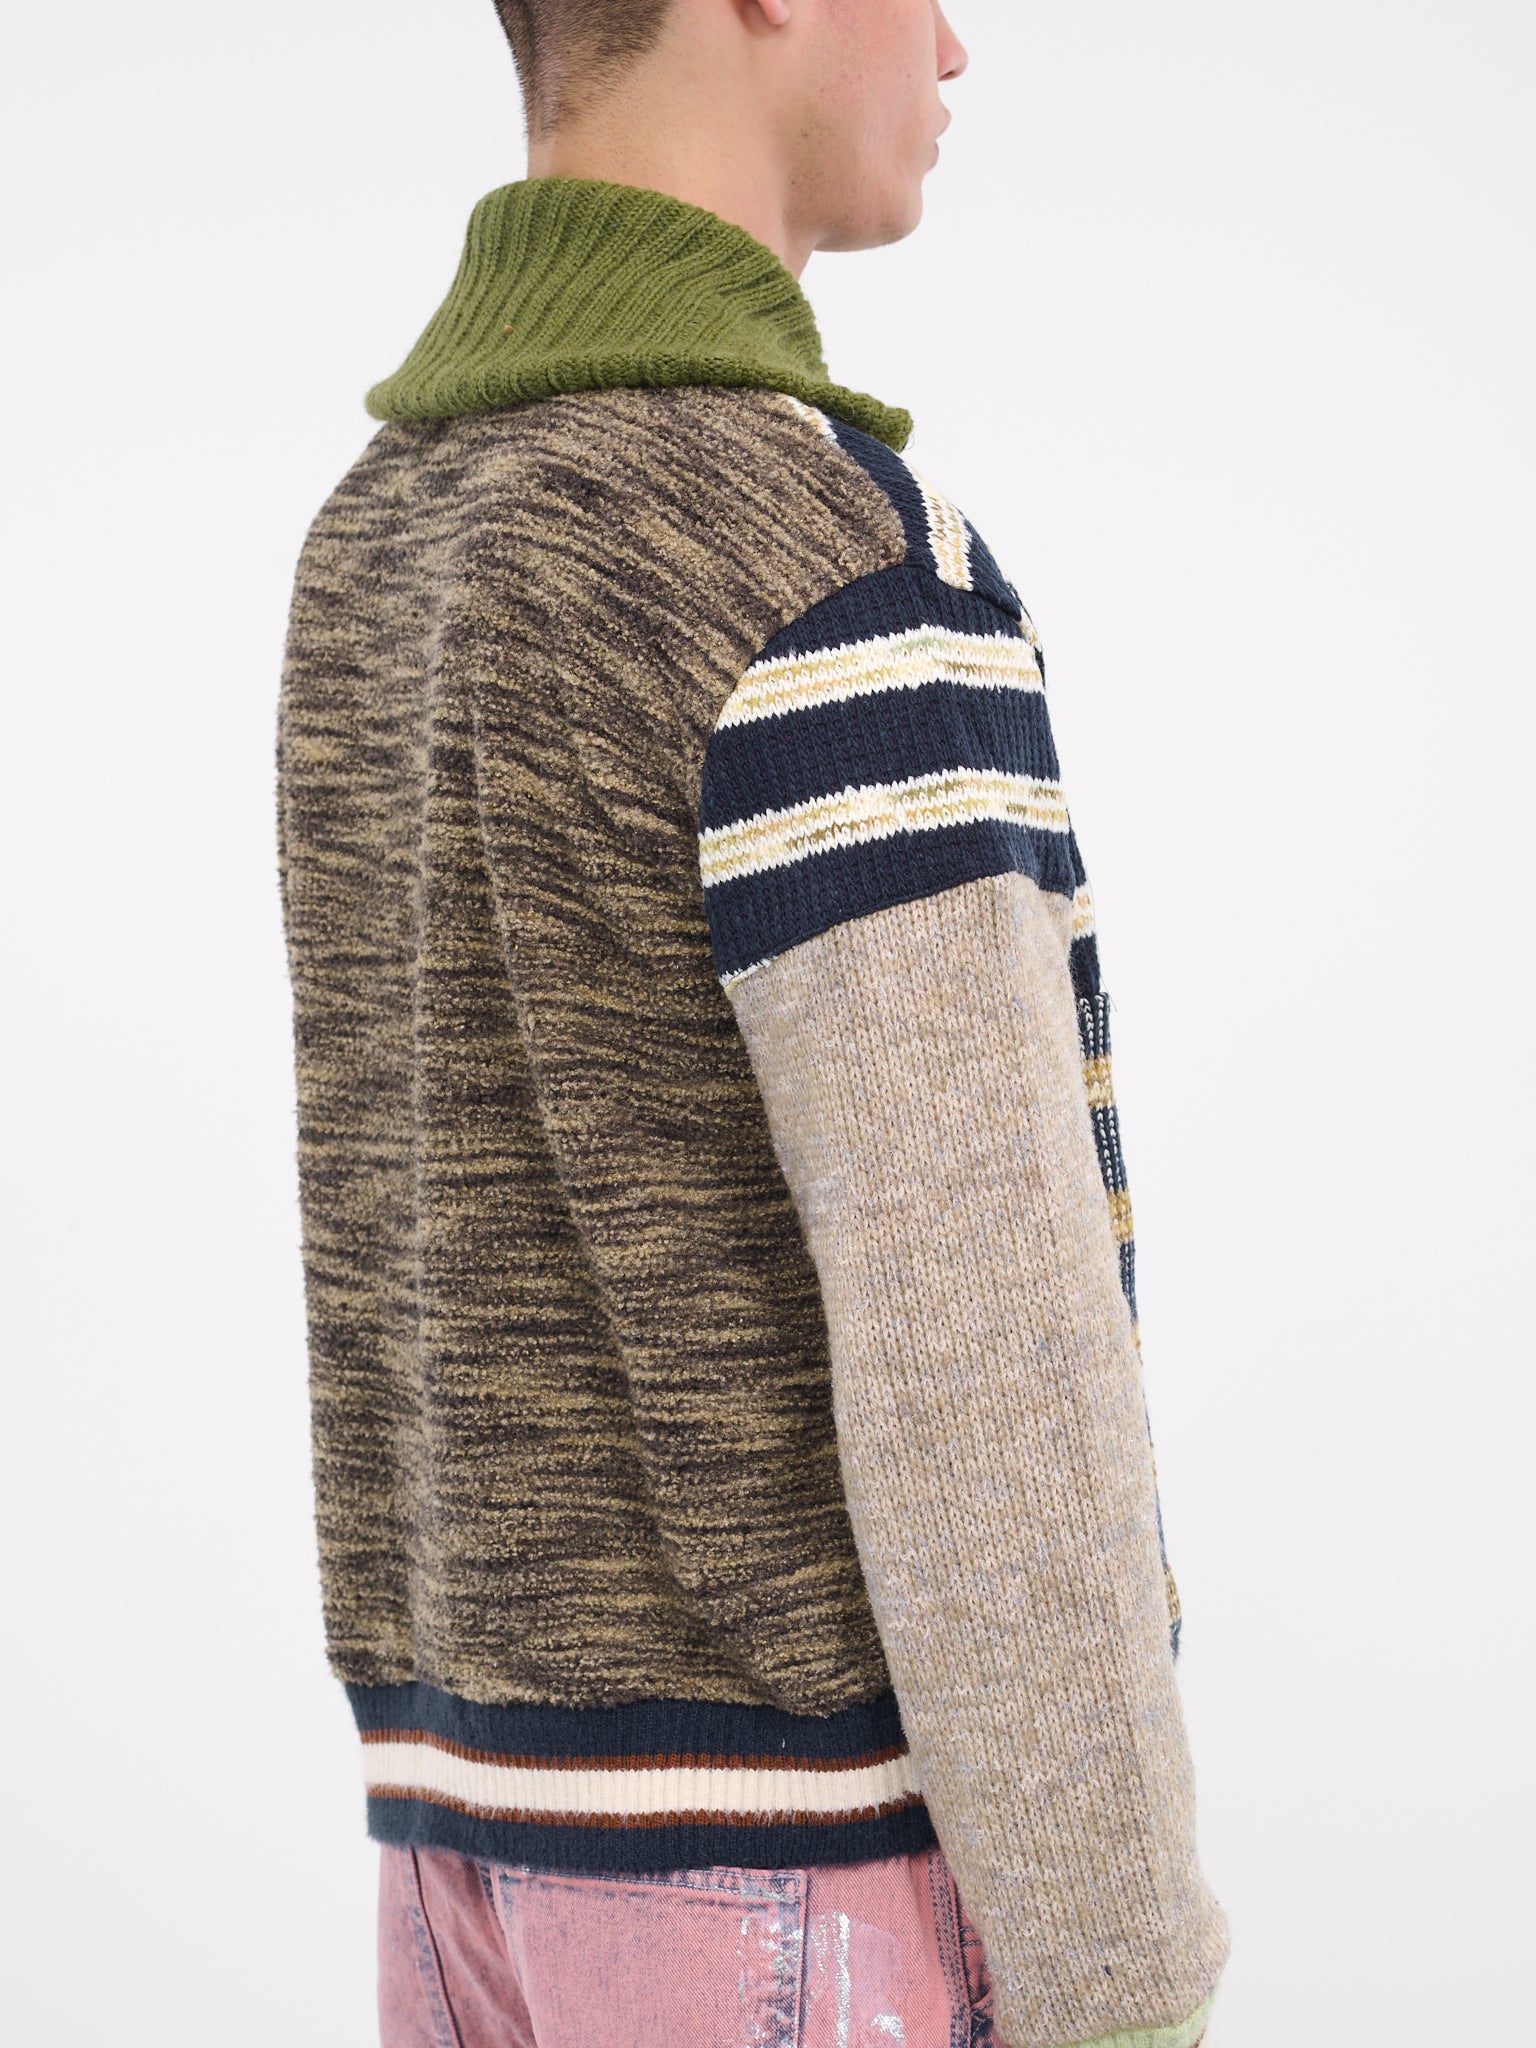 Patchwork Knit Jacket (ATB1007M-BEIGE-MULTI)